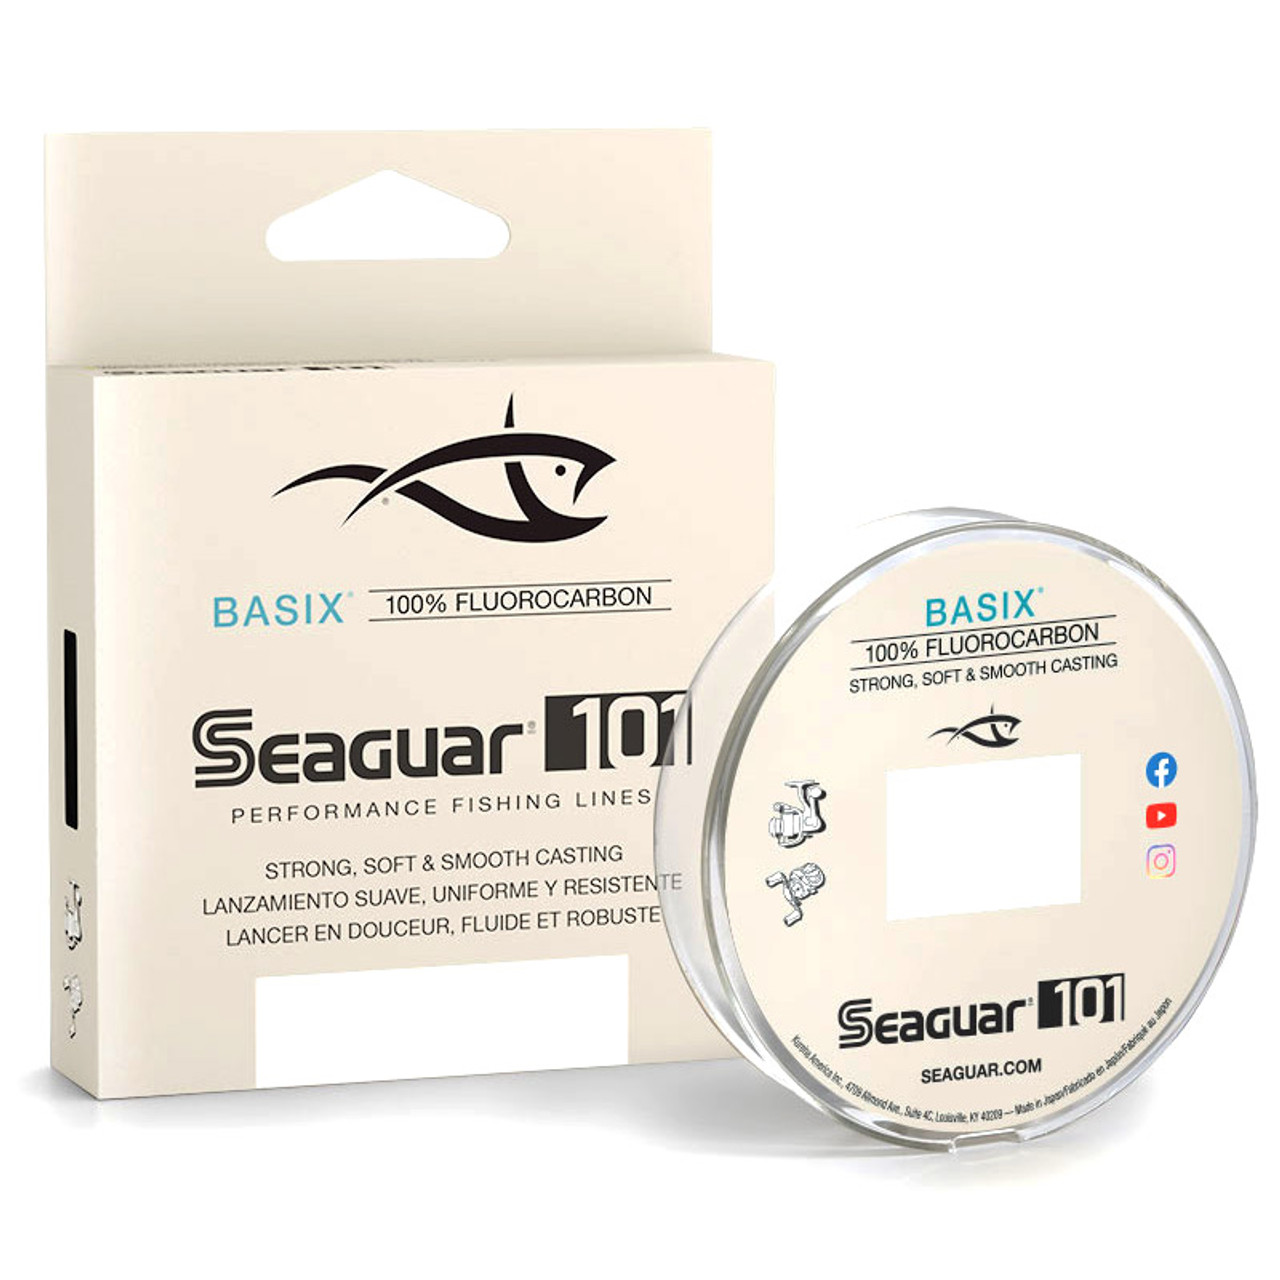 Basix 101 Clear 100% Fluorocarbon 175/200 yd Spool by Seaguar